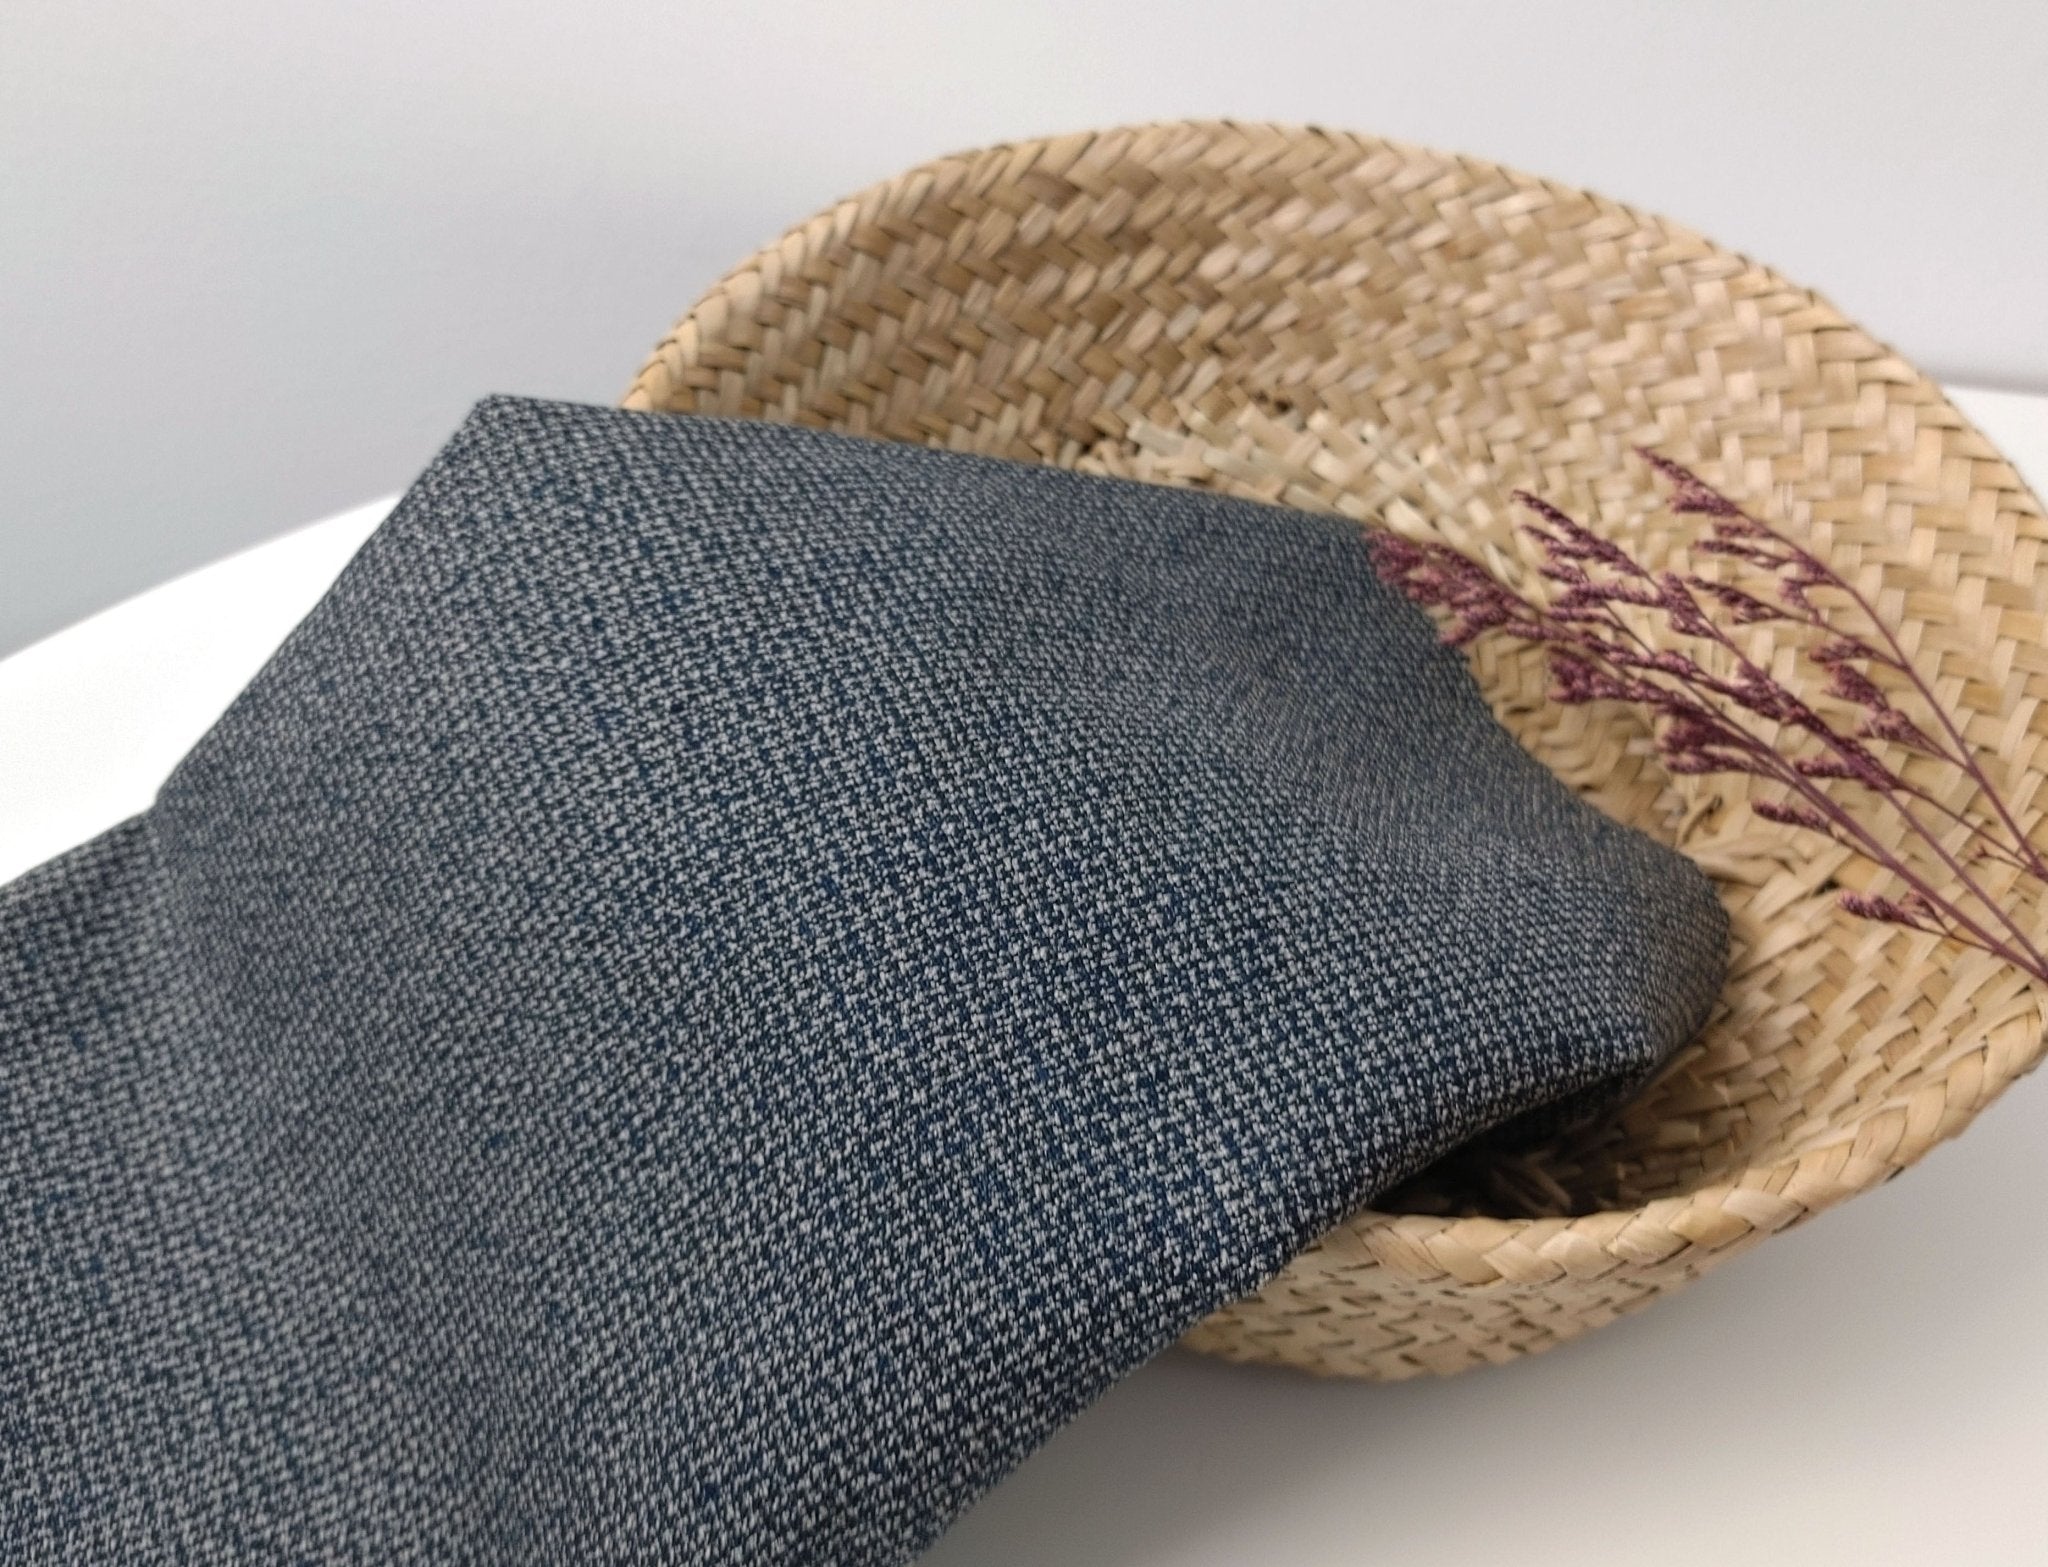 Serenity Linen Blend: Subtle Starcheck Fabric 2561 - The Linen Lab - Navy